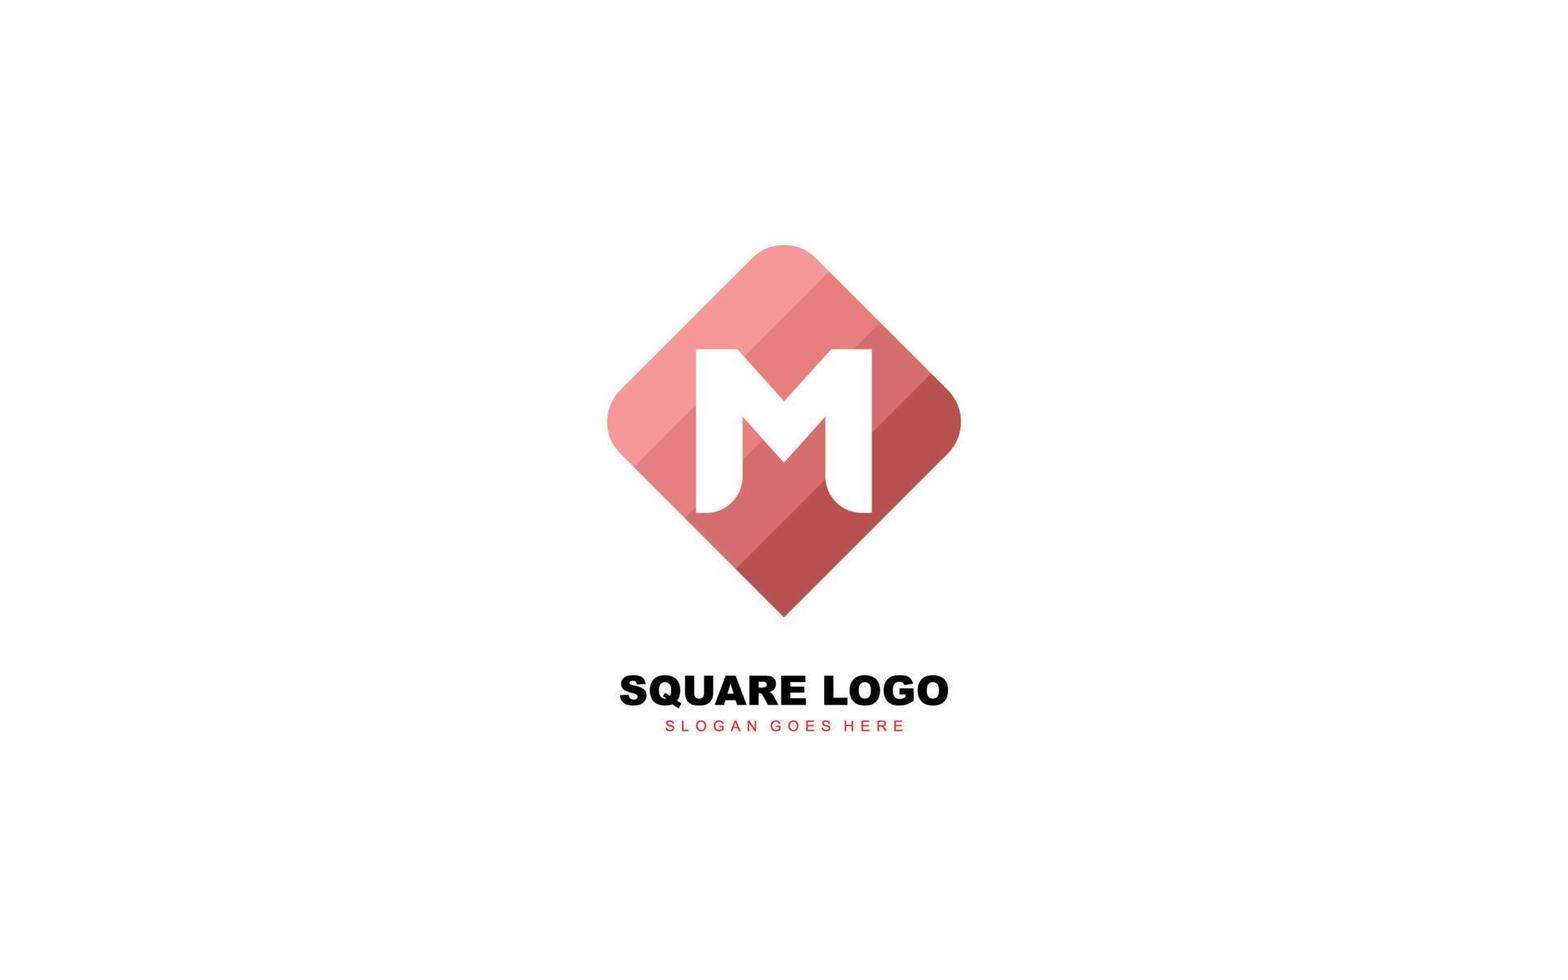 M logo shape for identity. letter template vector illustration for your brand.